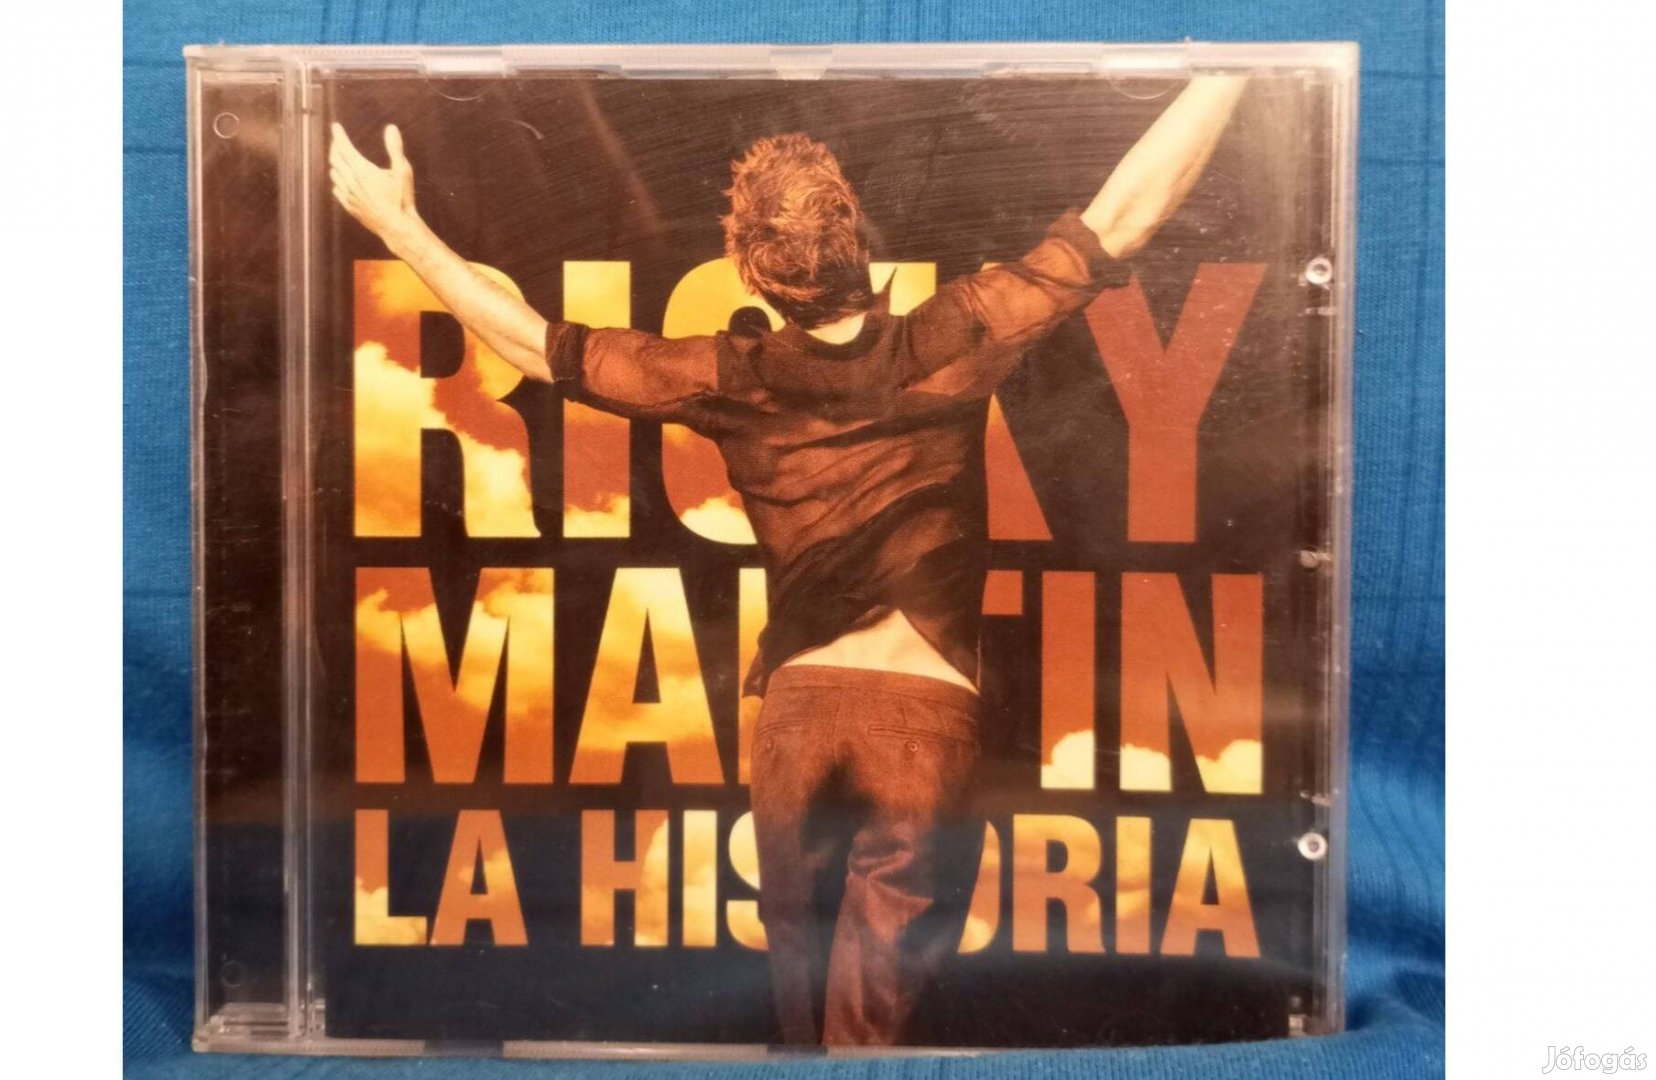 Ricky Martin - La Historia CD. /új,fóliás/